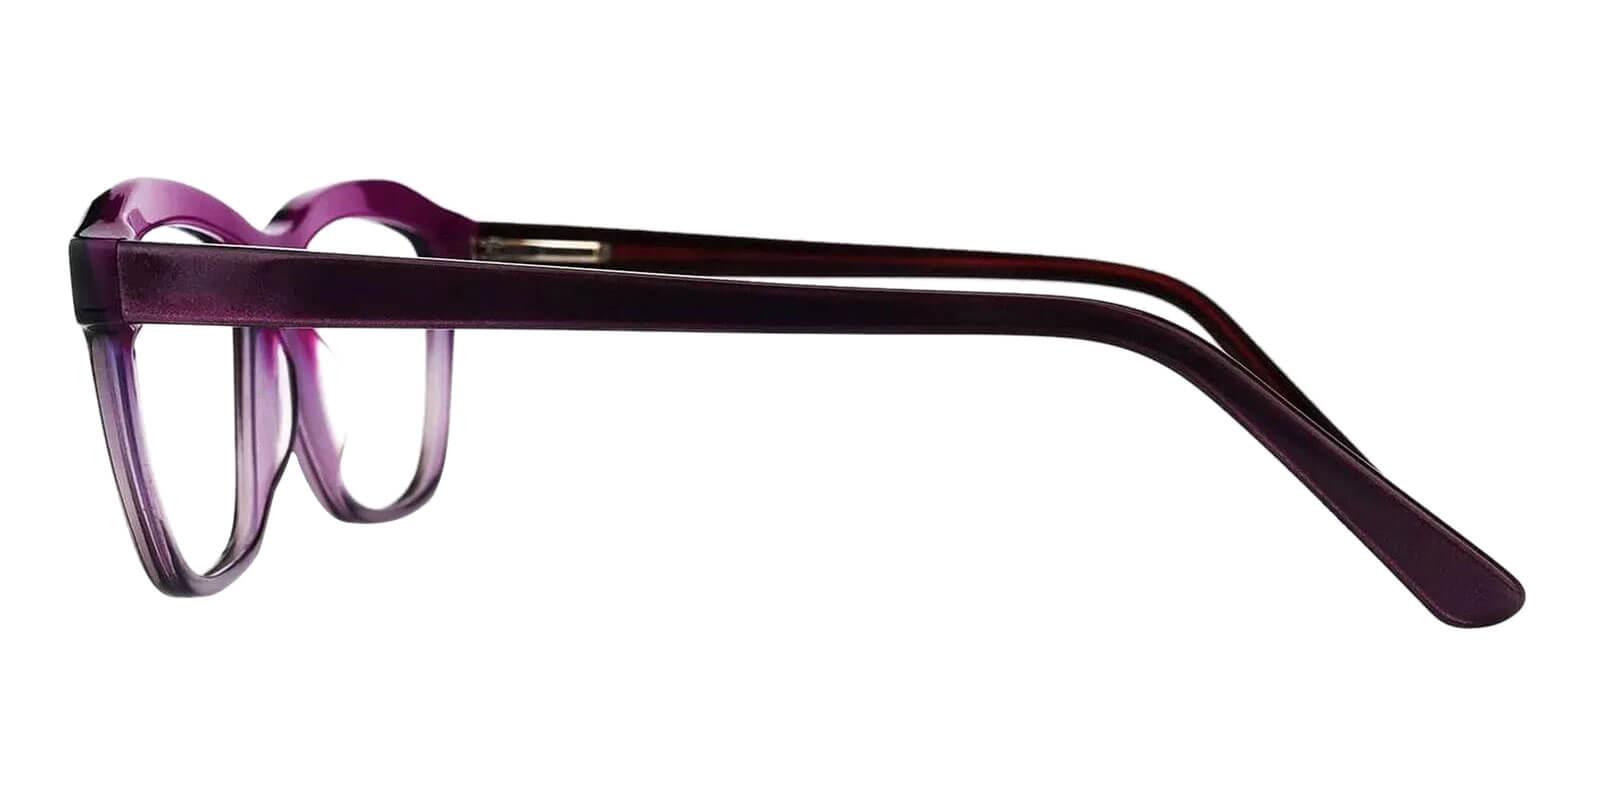 Sonia Purple Acetate Eyeglasses , SpringHinges , UniversalBridgeFit Frames from ABBE Glasses